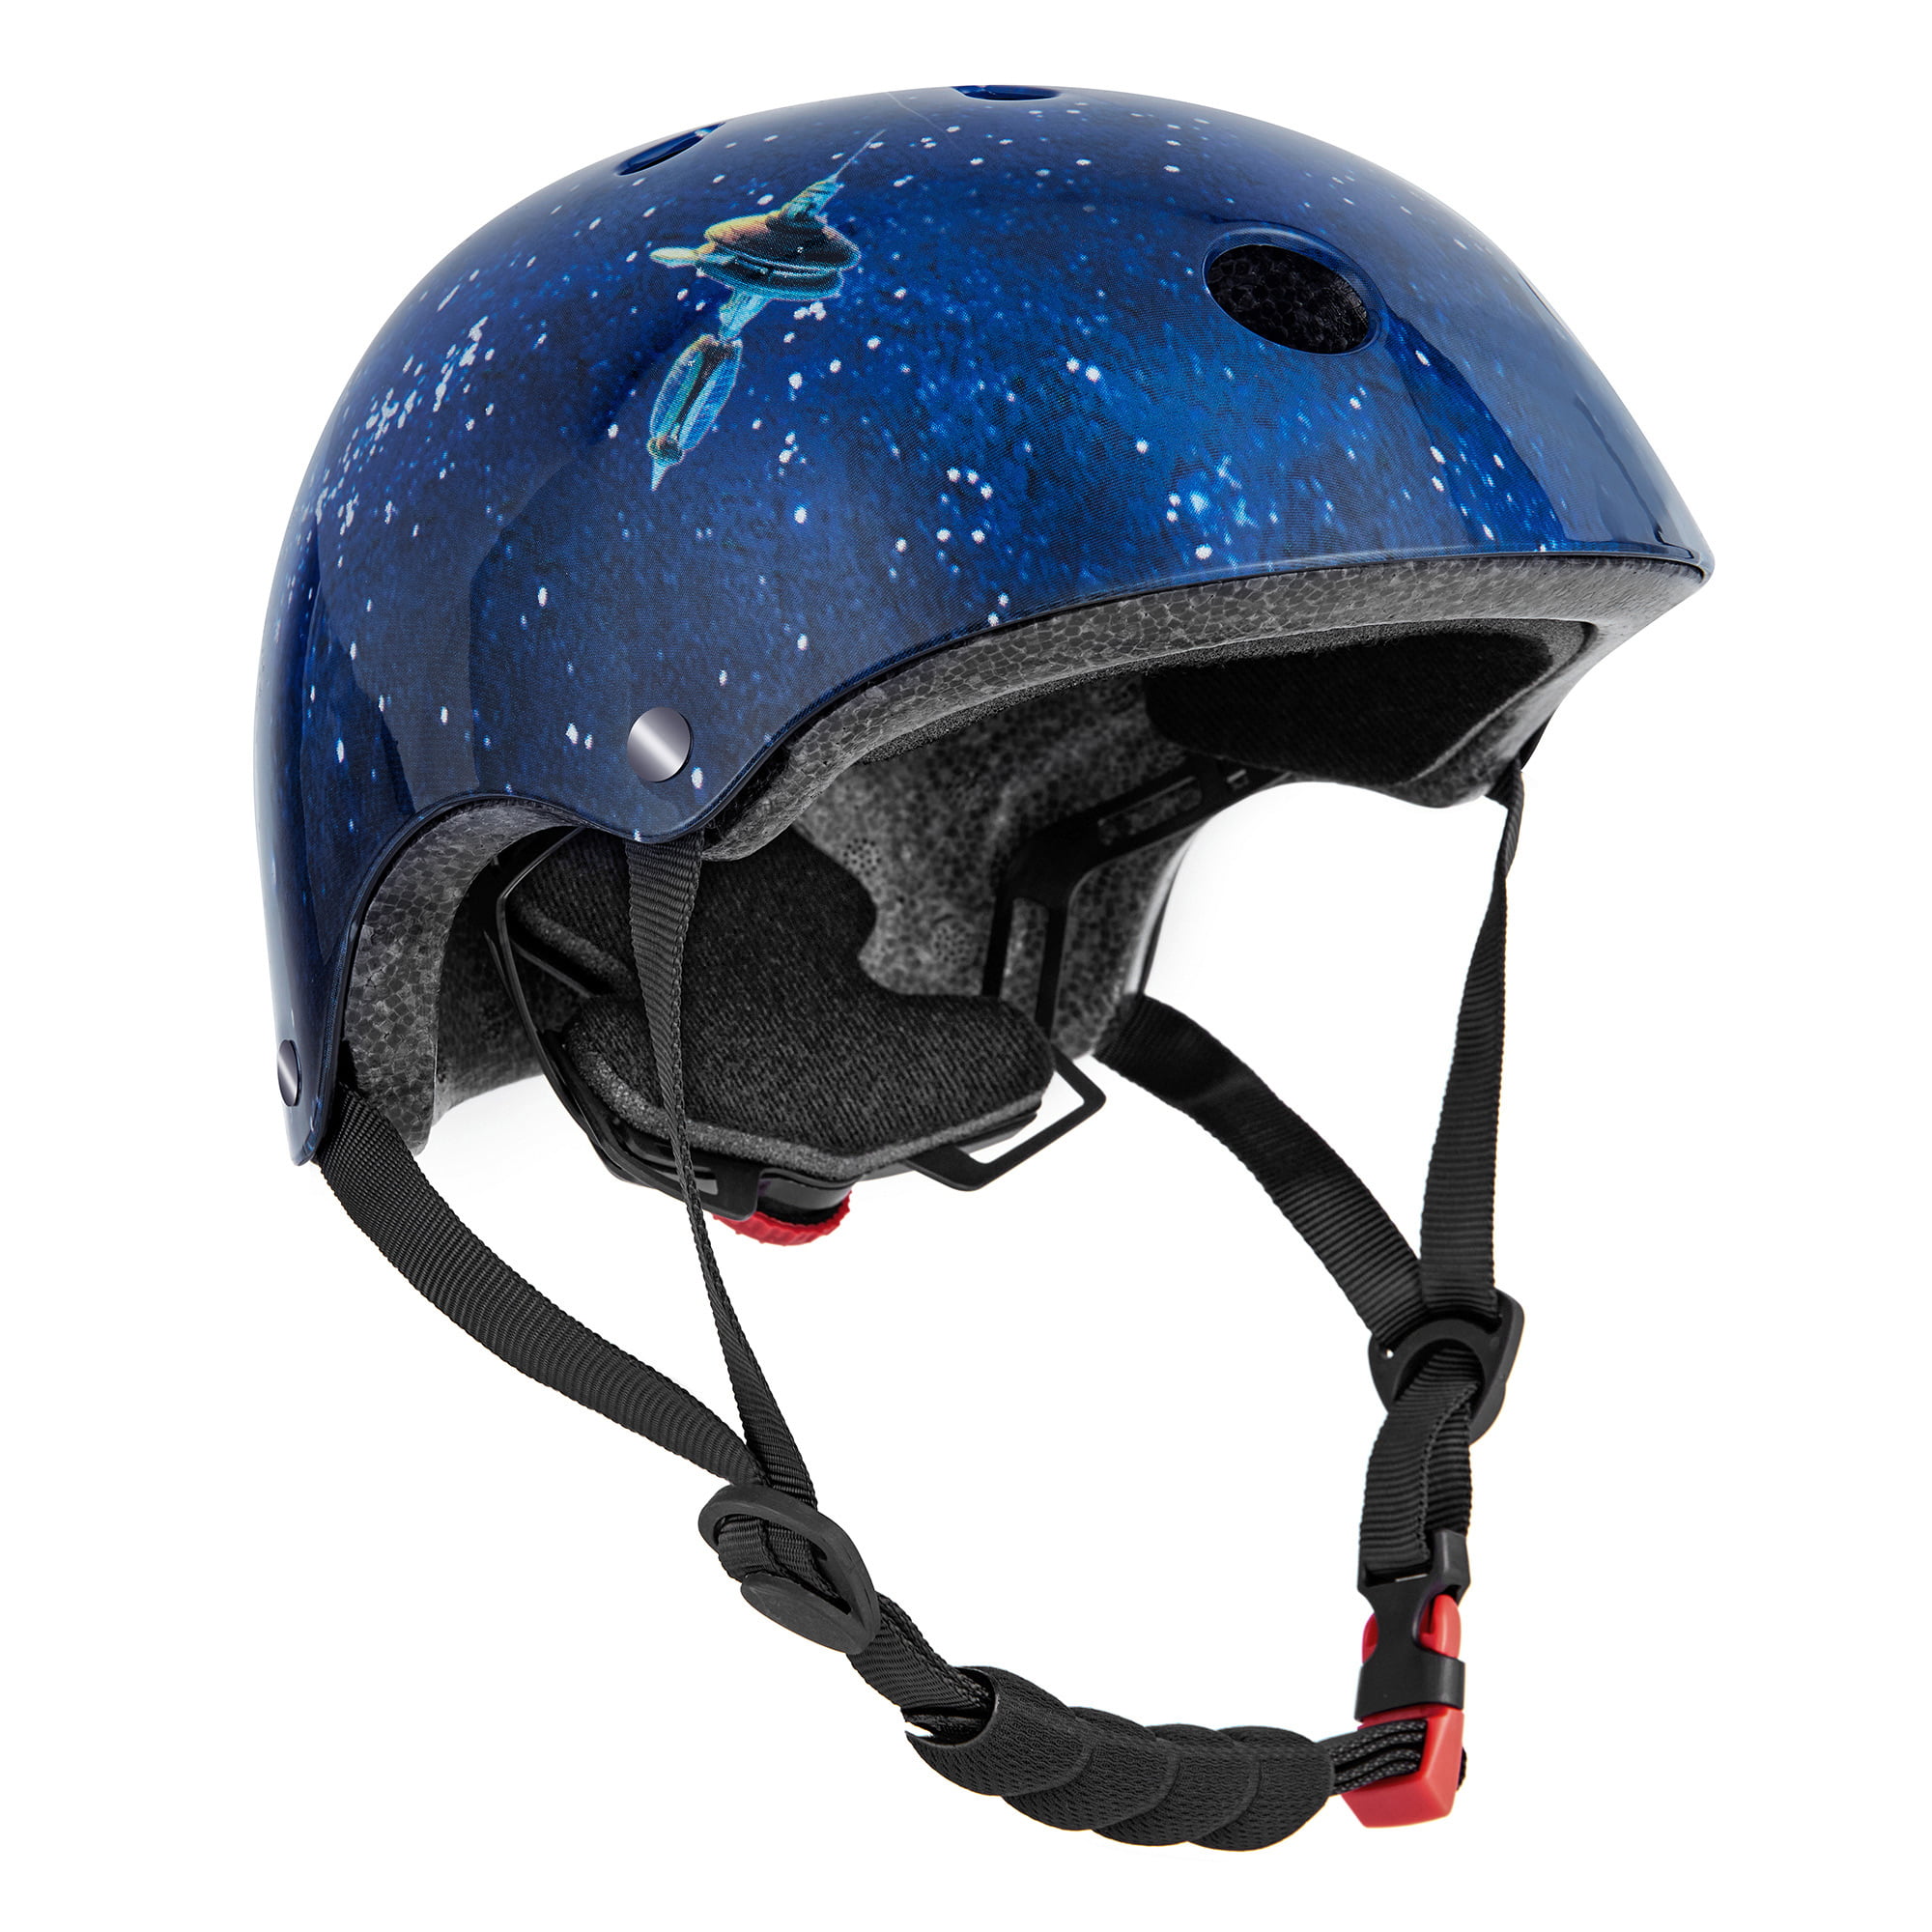 Details about   Kids Children Safety Protective Helmet Bike Scooter Skateboard Boys Girls Helmet 